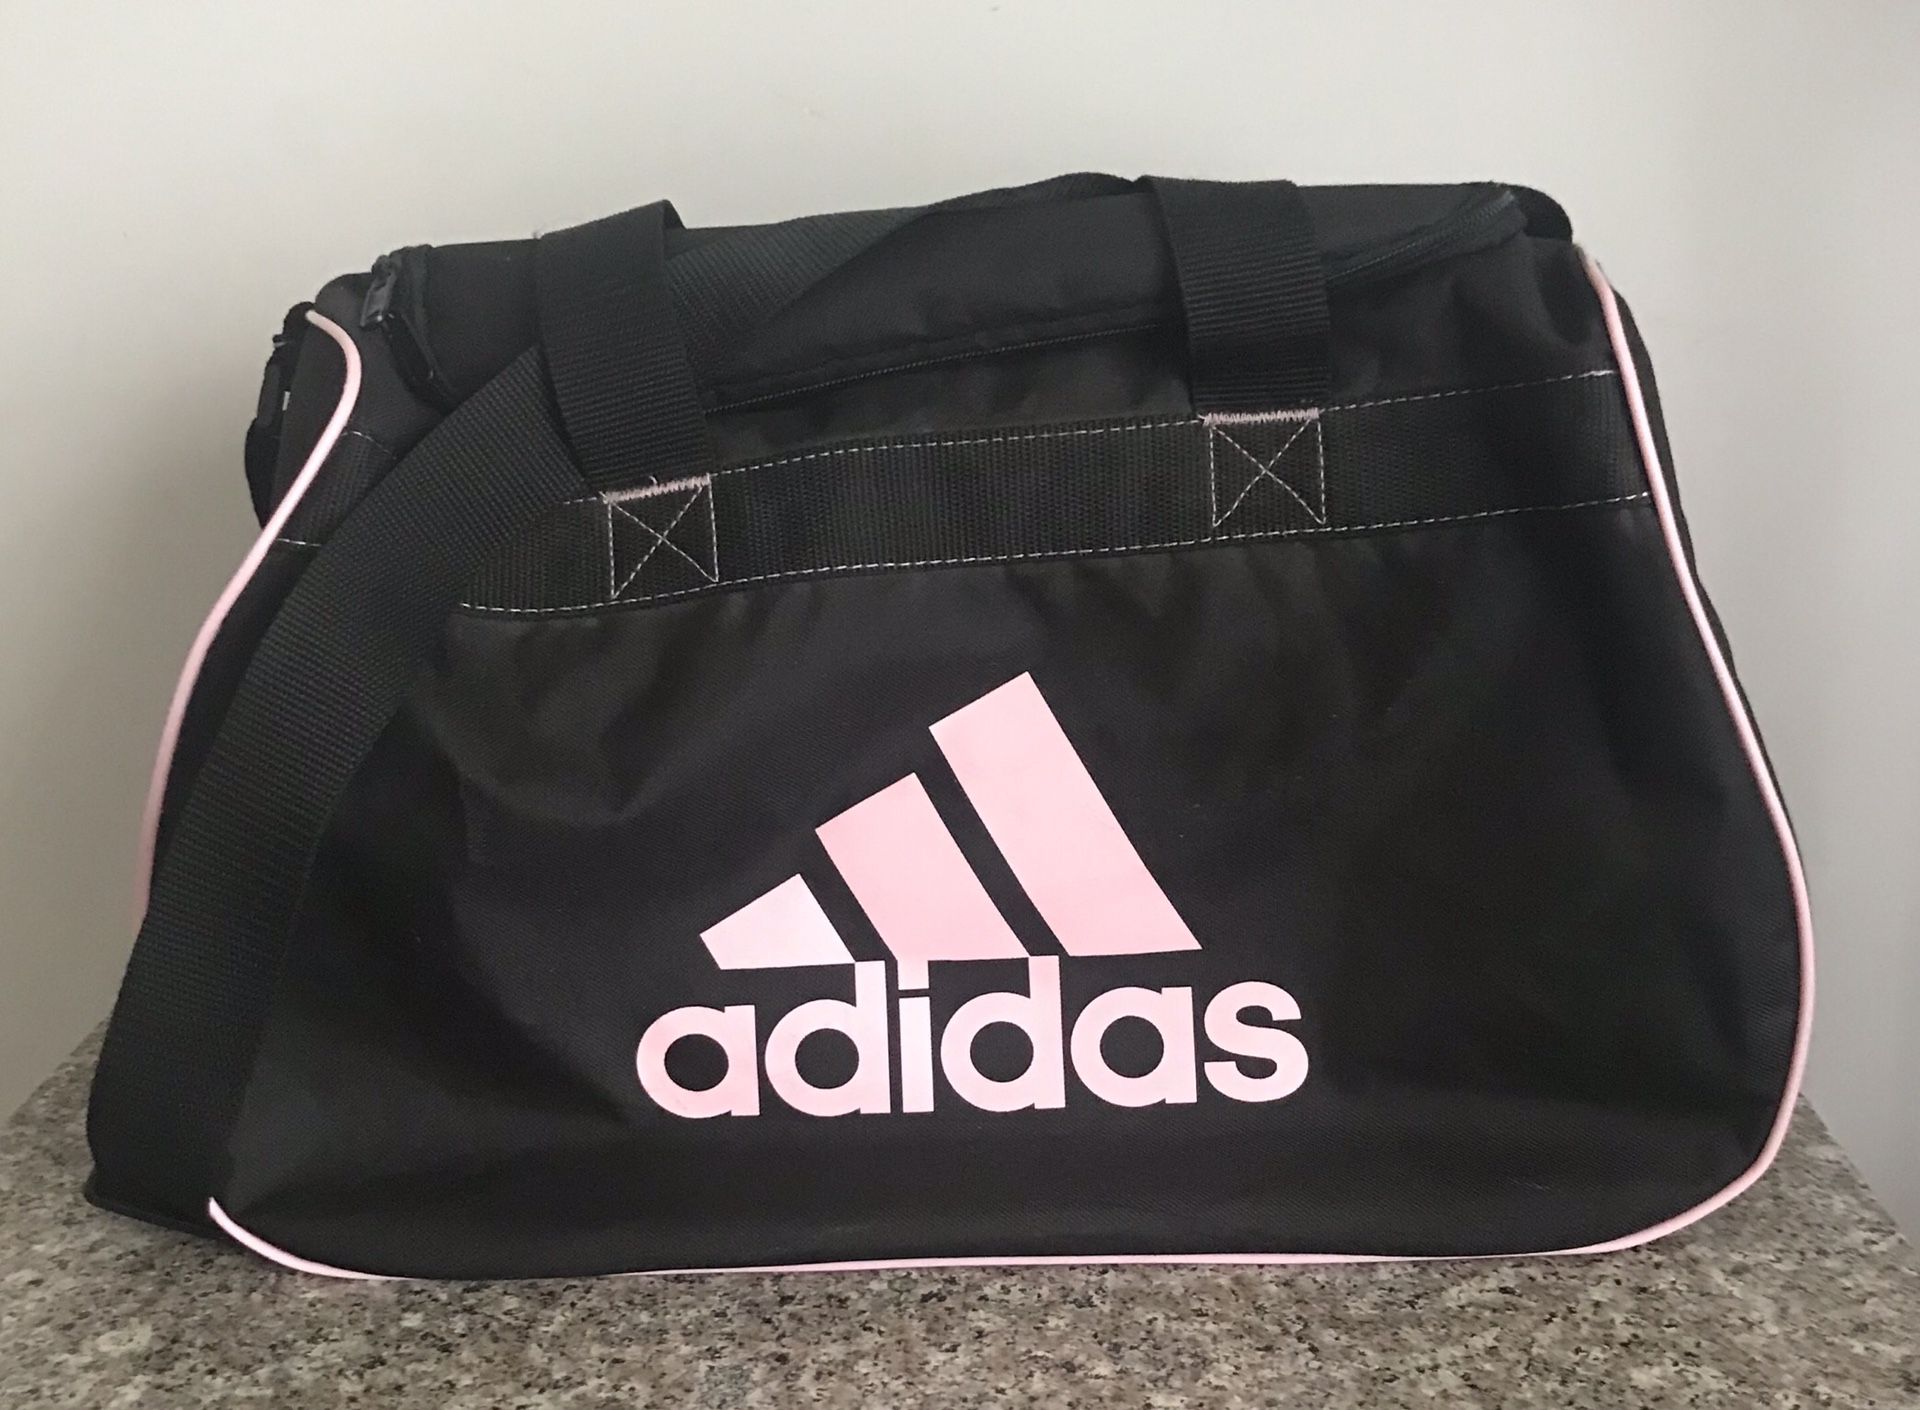 Adidas Duffle Bag Black and pink